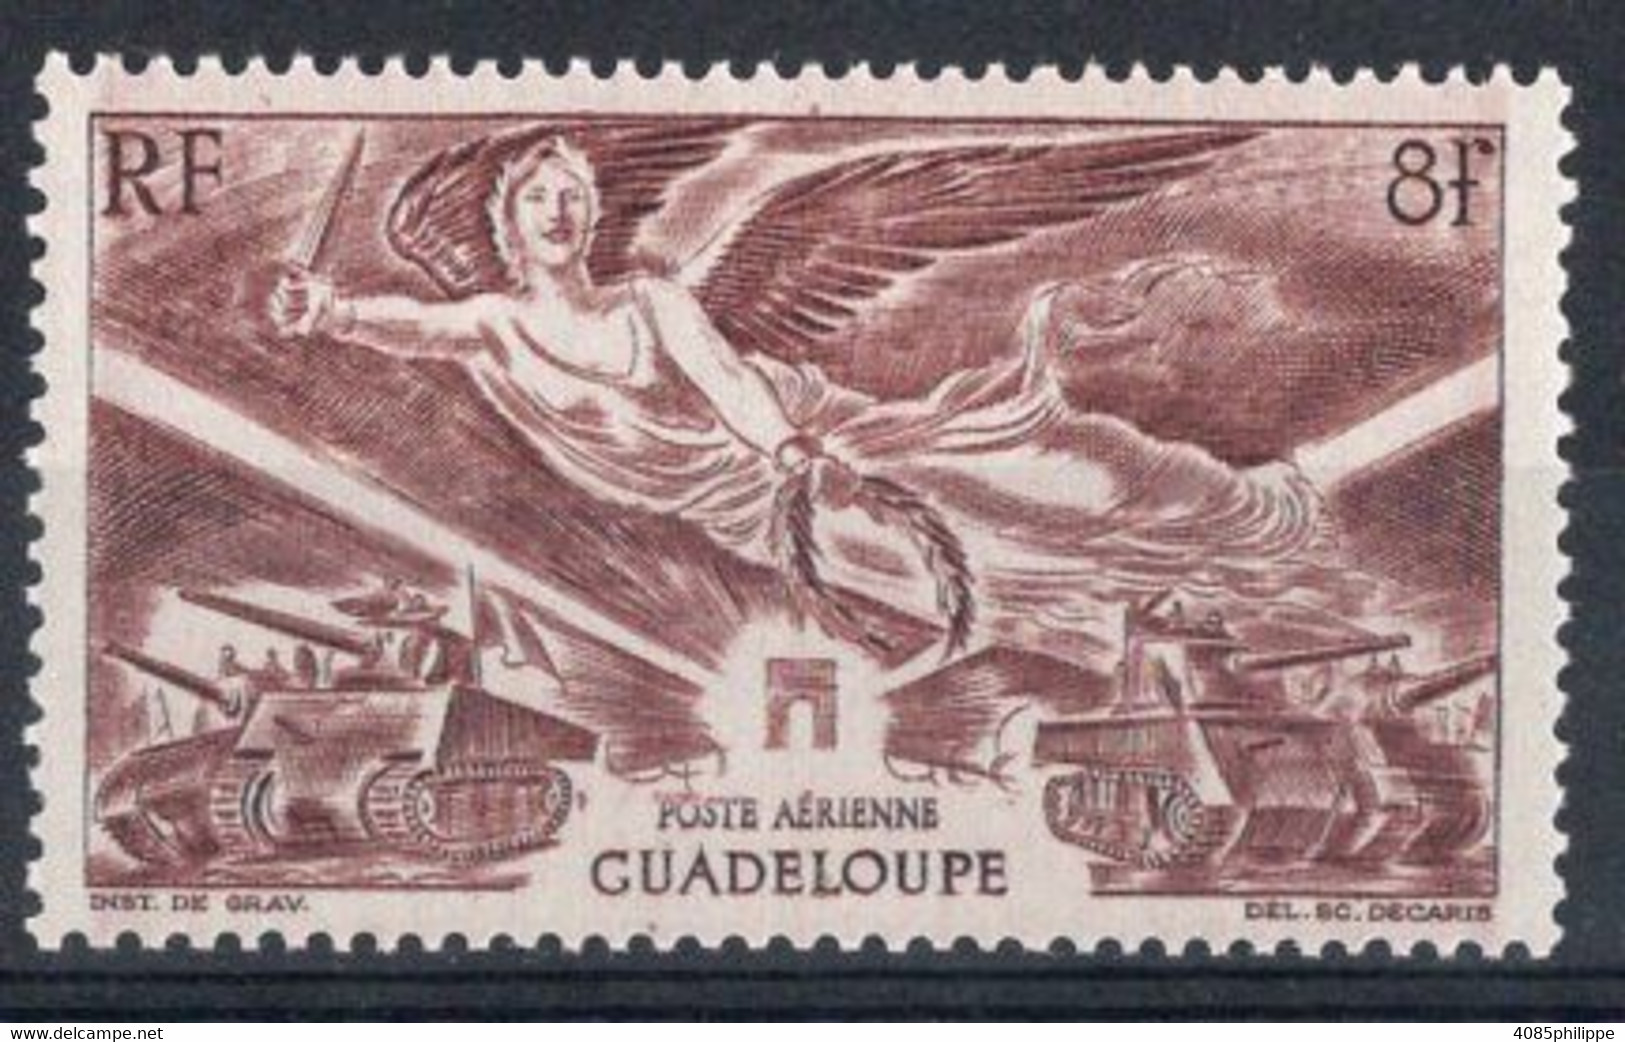 Guadeloupe Timbre-poste Aérienne N°6* Neuf Charnière TB Cote 1€25 - Aéreo